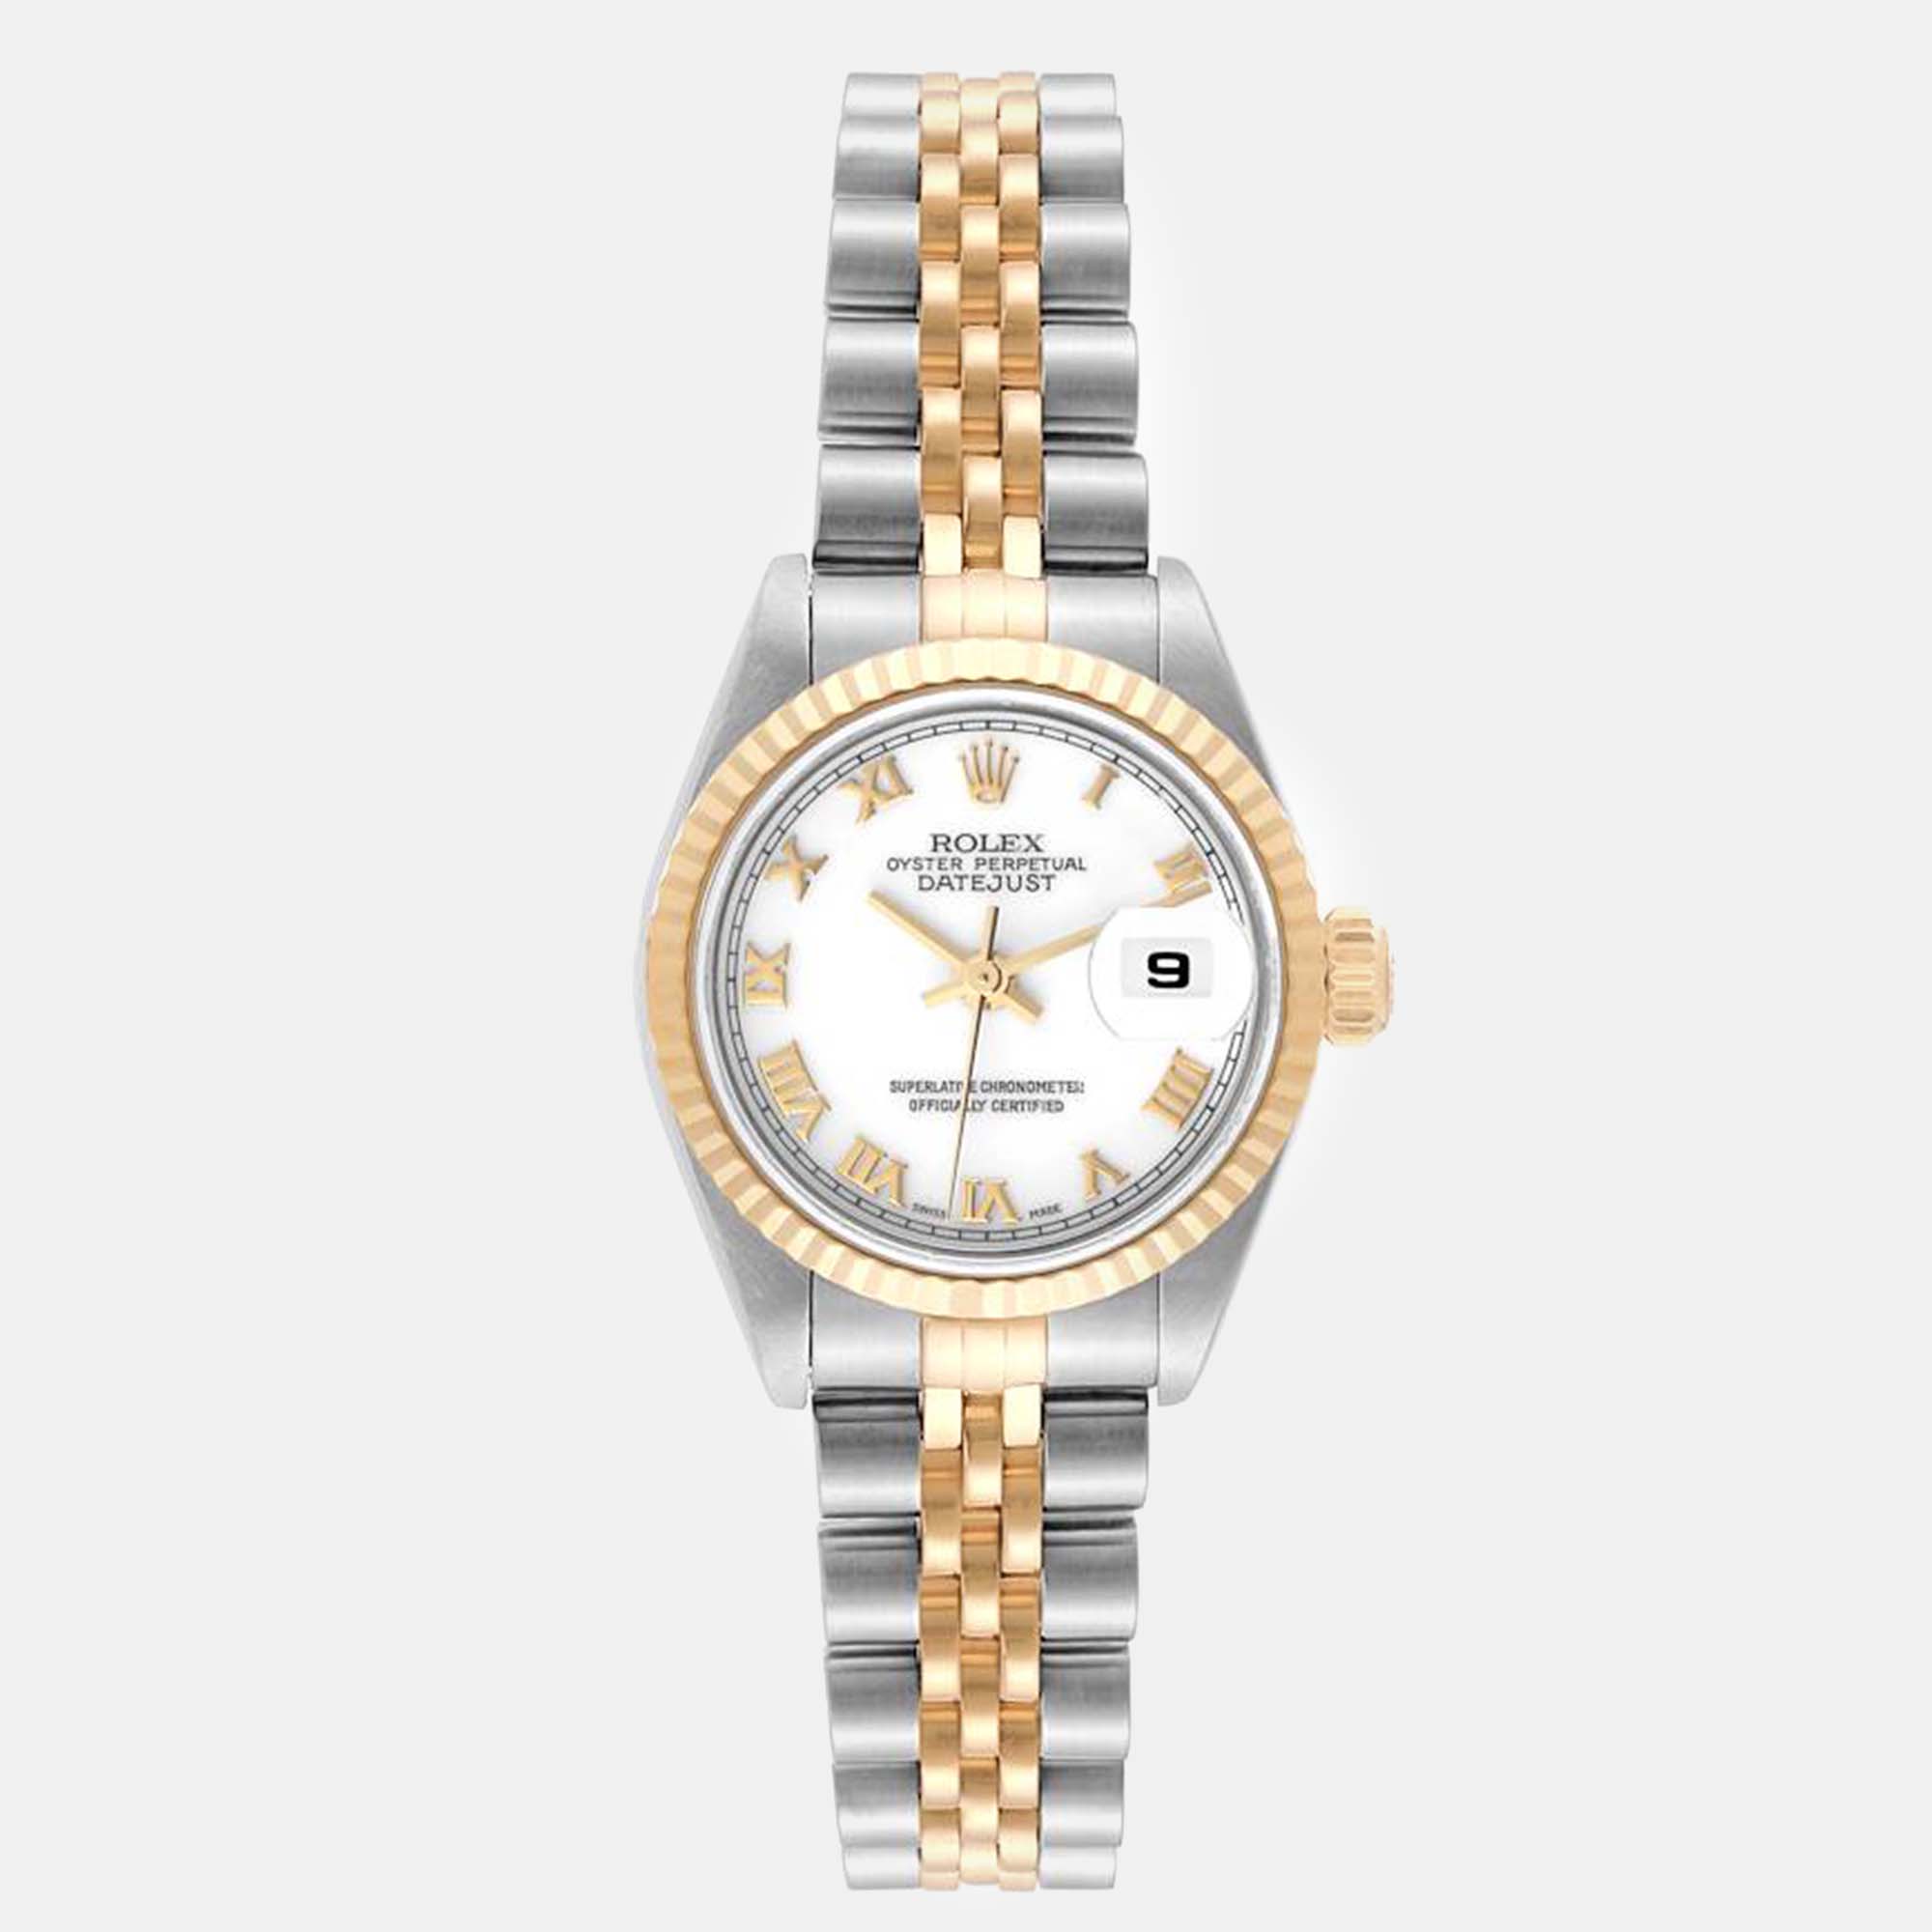 Rolex datejust steel yellow gold white dial ladies watch 26 mm